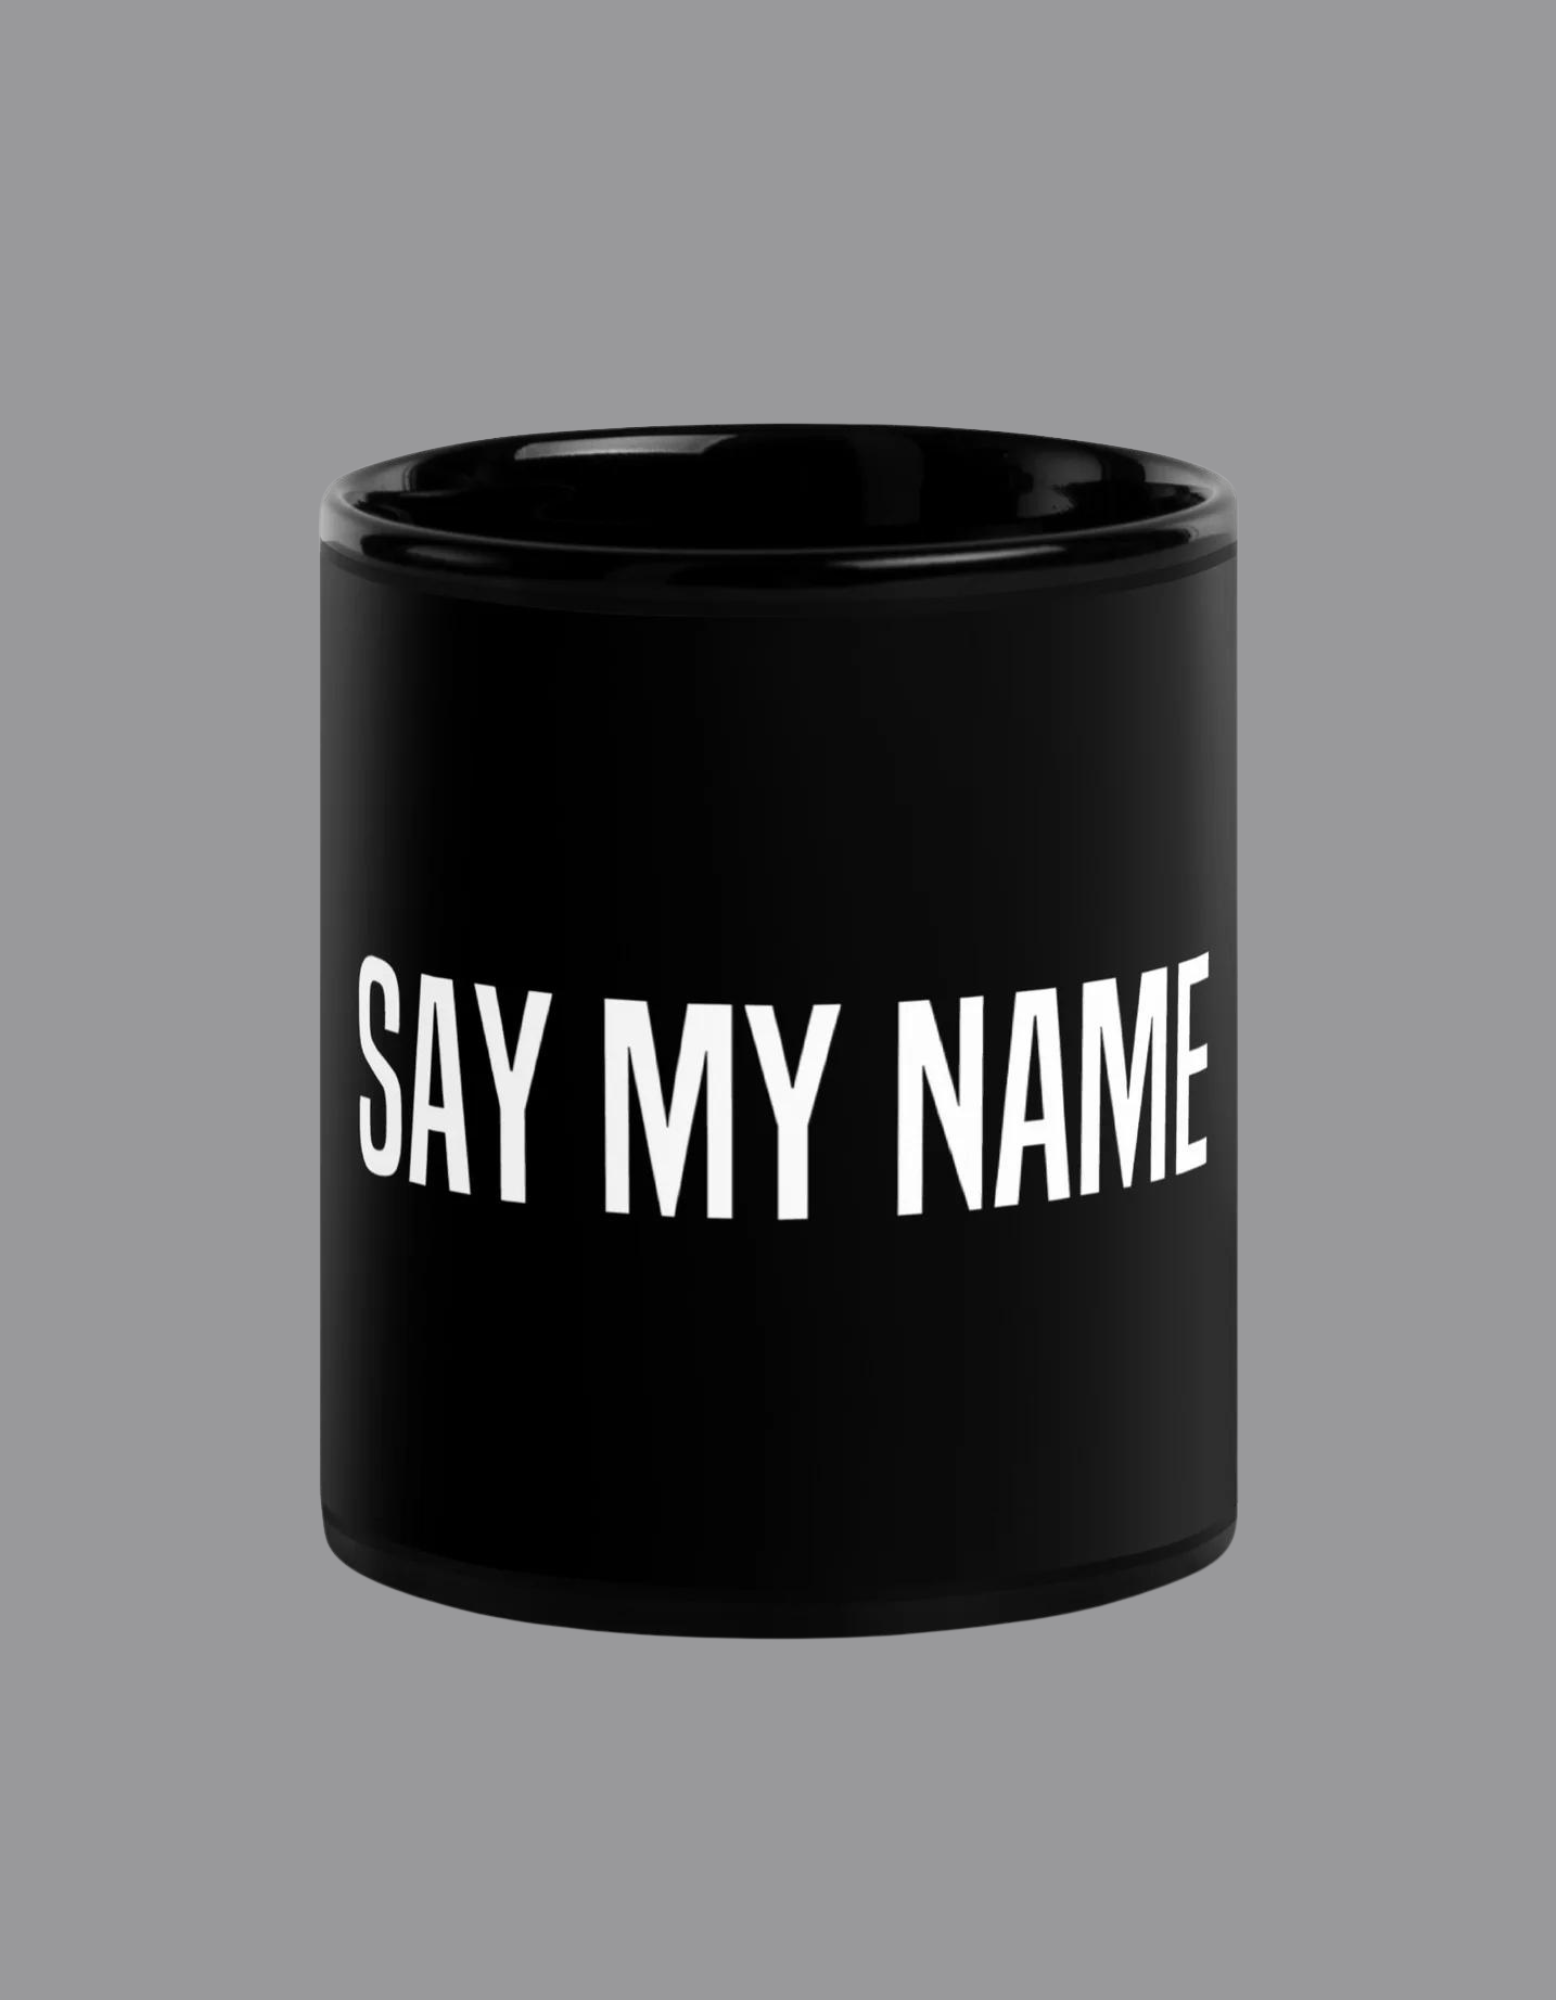 Glossy black mug "SAY MY NAME"